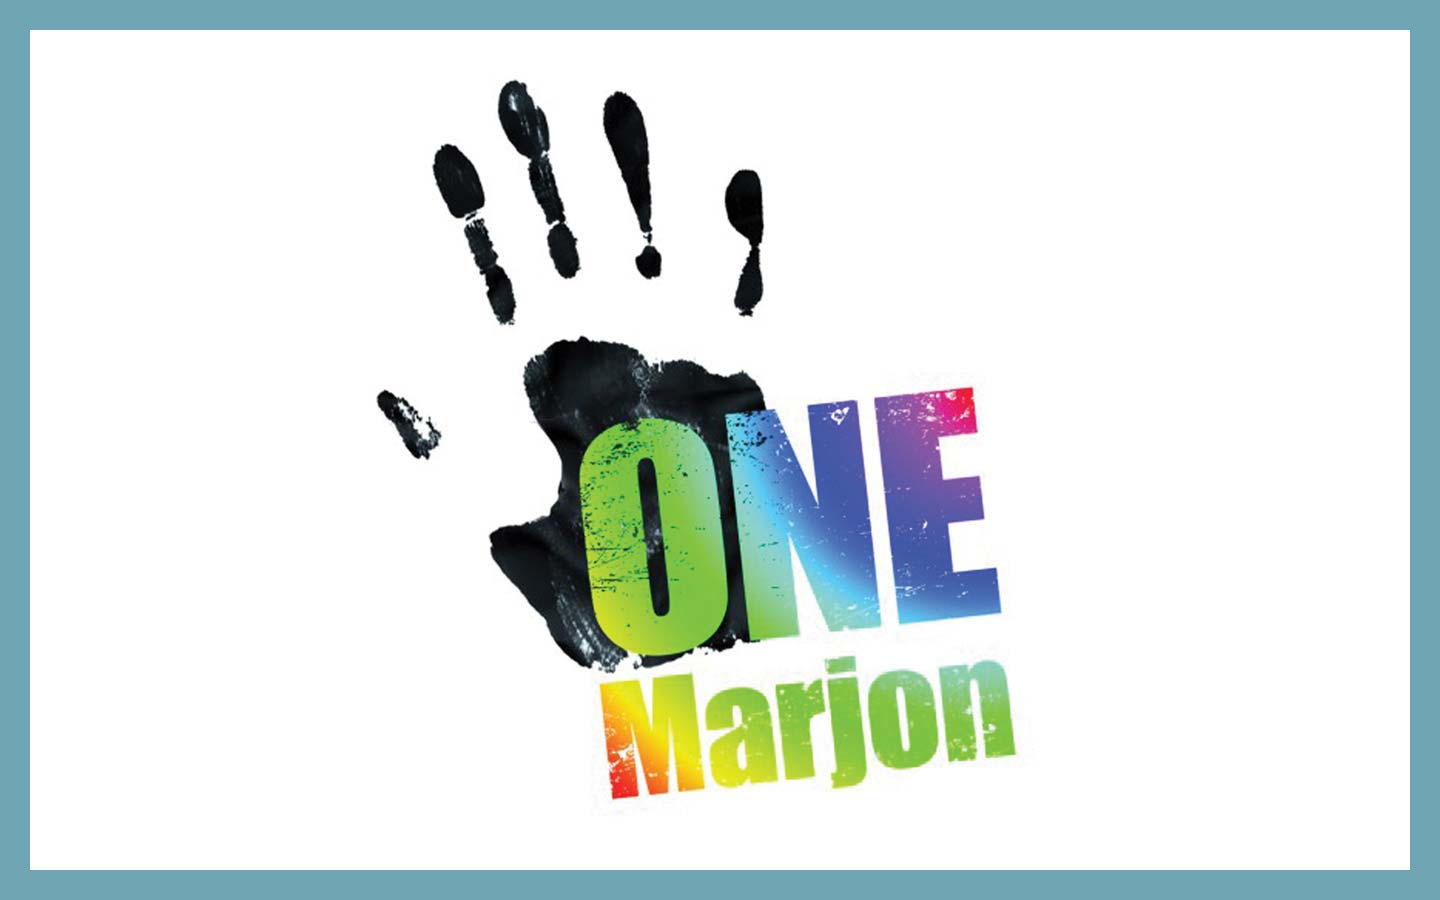 Diversity - One Marjon